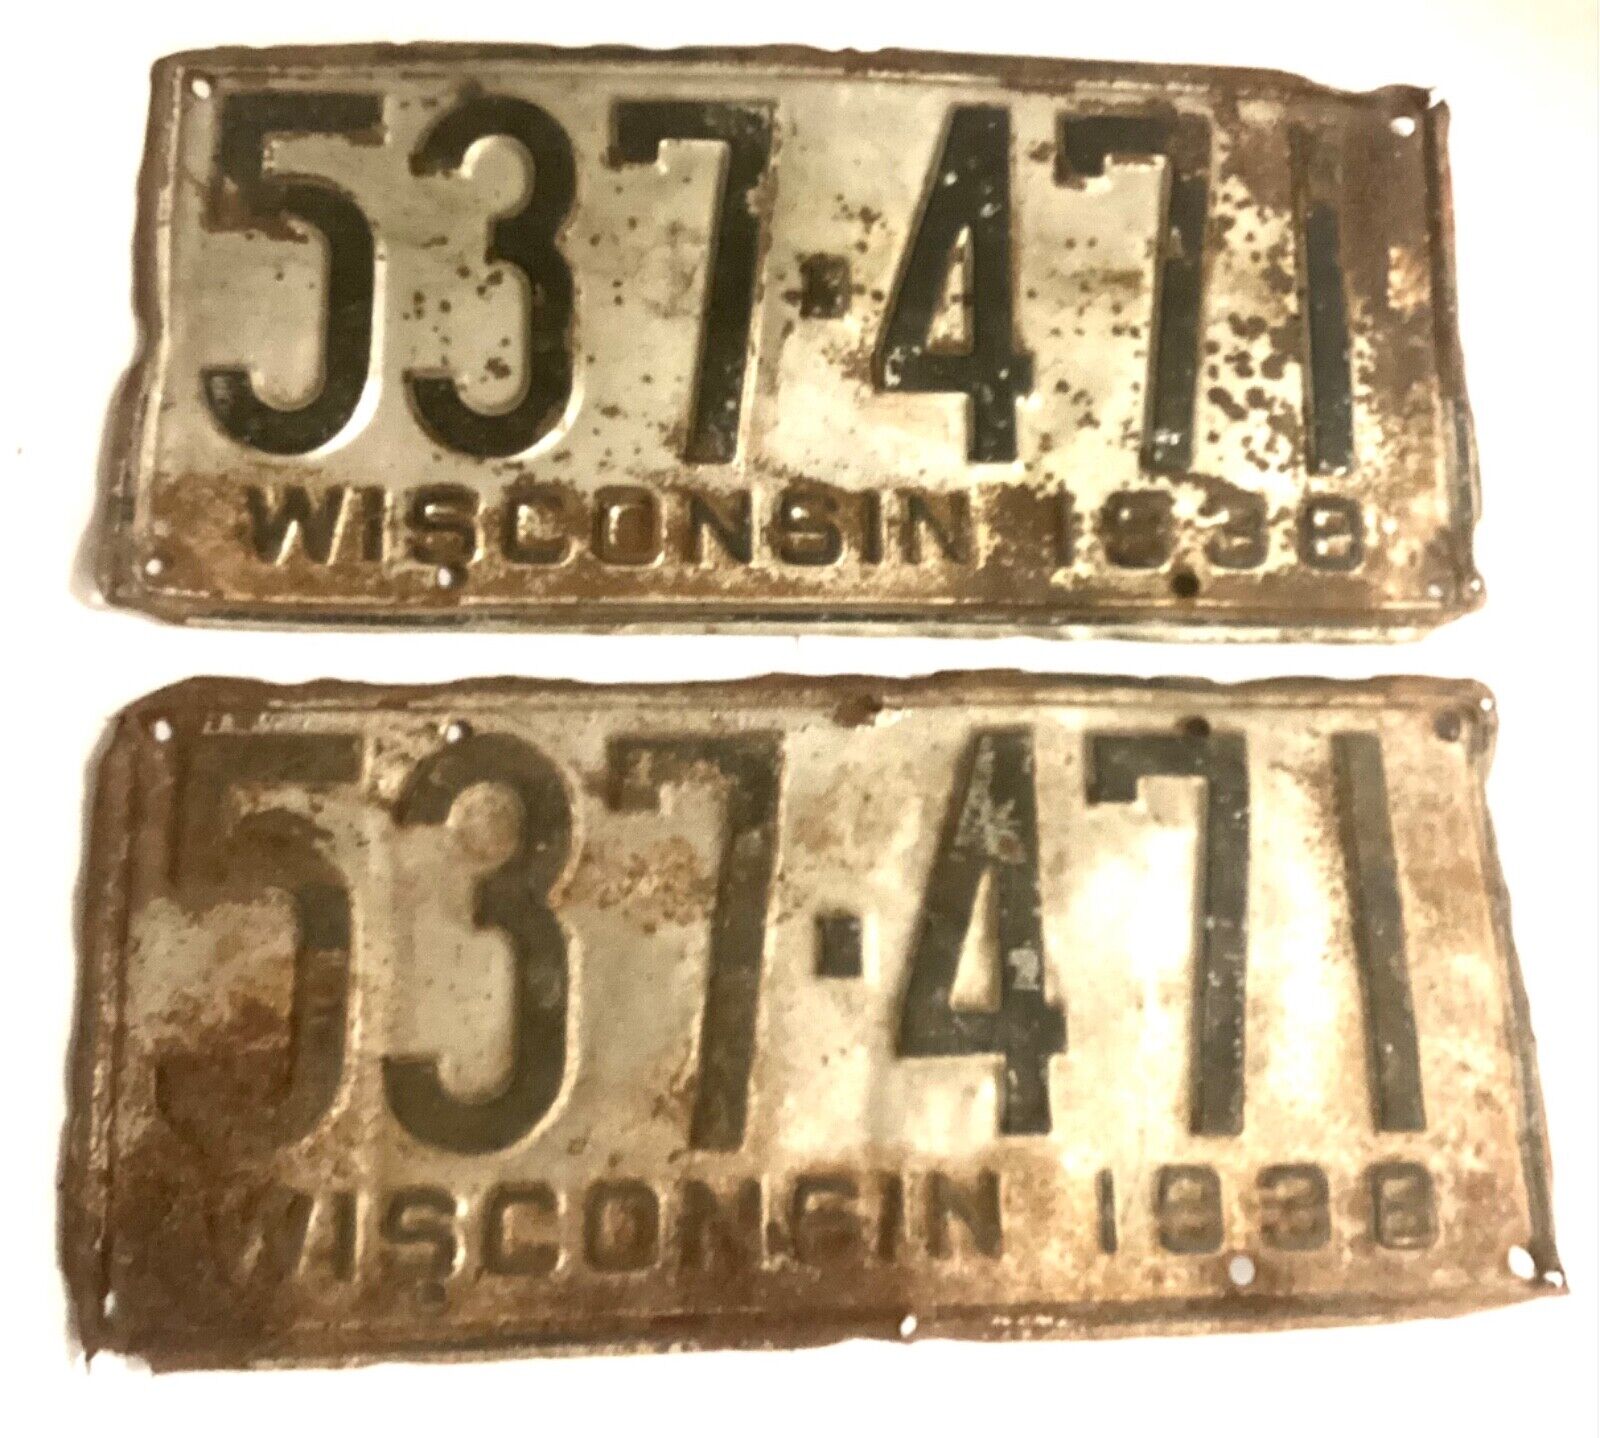 1938 Wisconsin Automobile License Plate Pair Antique Rare Vintage Rustic Mancave